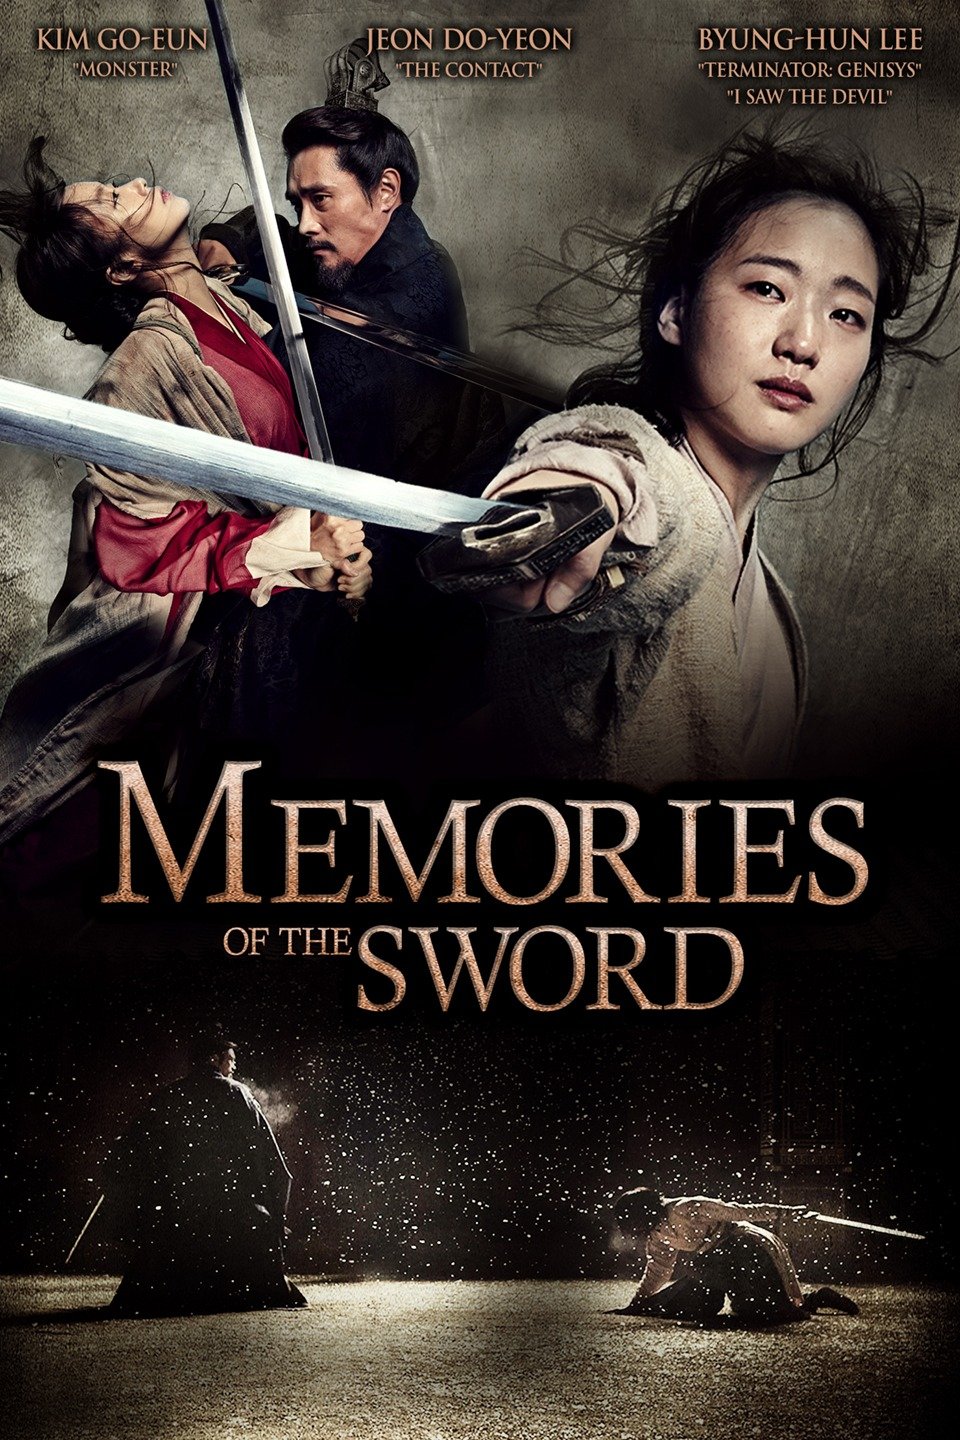 [MINI Super-HQ] Memories of the Sword (2015) ศึกจอมดาบชิงบัลลังก์ [1080p] [พากย์ไทย 5.1 + เสียงเกาหลี DTS] [BrRip.DTS.x264] [บรรยายไทย + อังกฤษ] [เสียงไทย + ซับไทย] [ONE2UP]